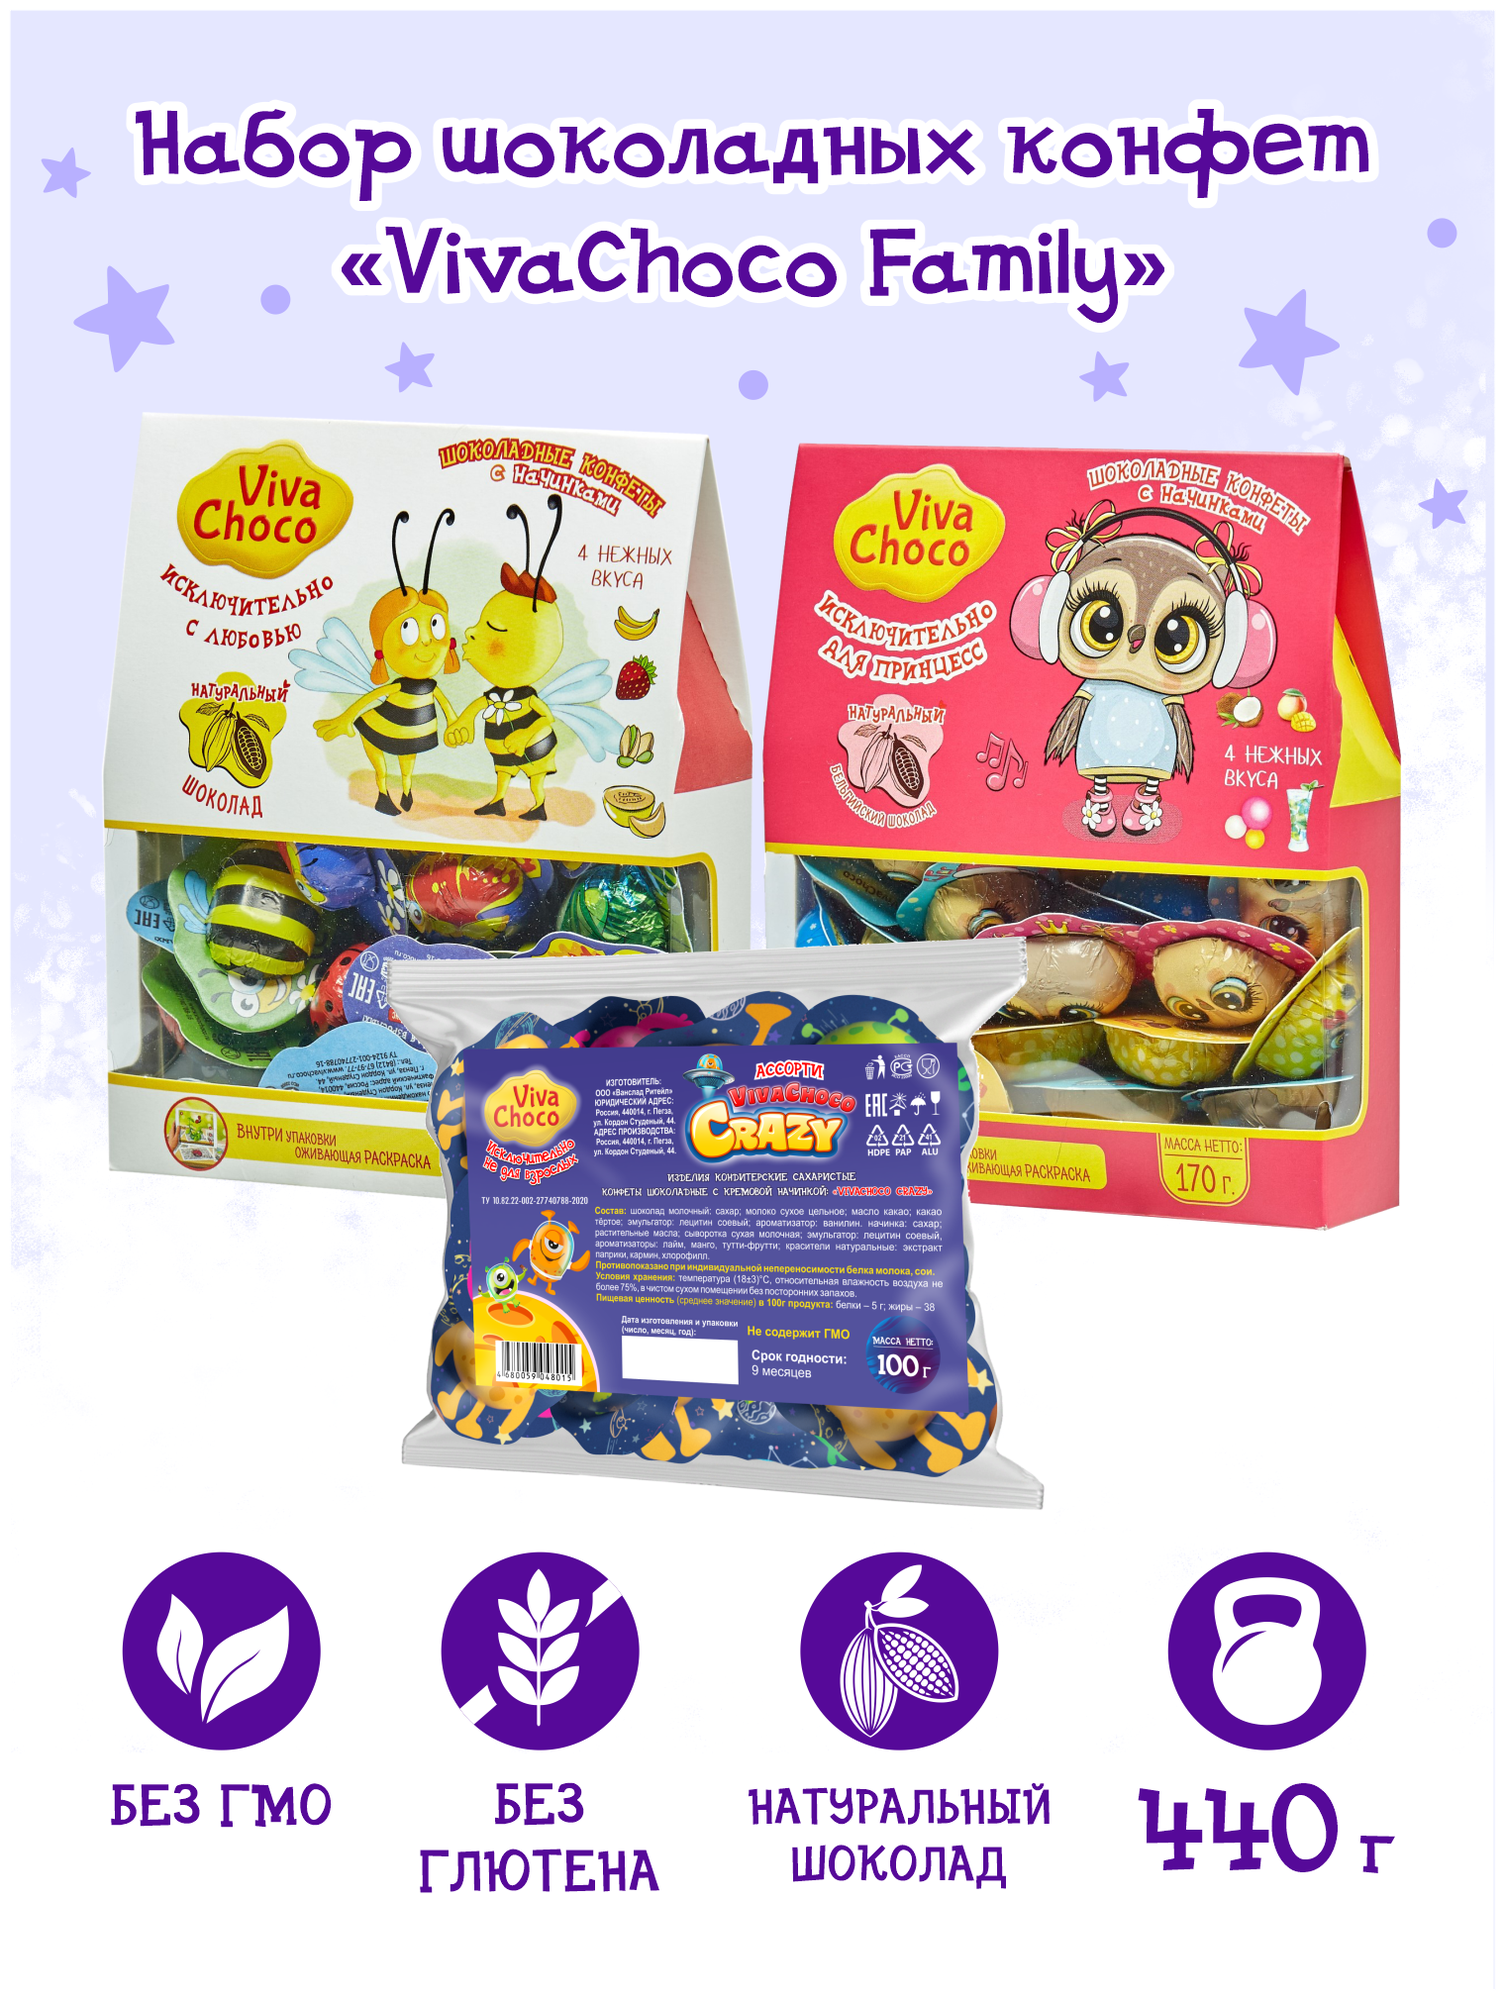 Vivochoco набор конфет ассорти "VivaChoco Family" Happy day 170гр +исключительно для принцесс 170 гр +Crazy100 гр